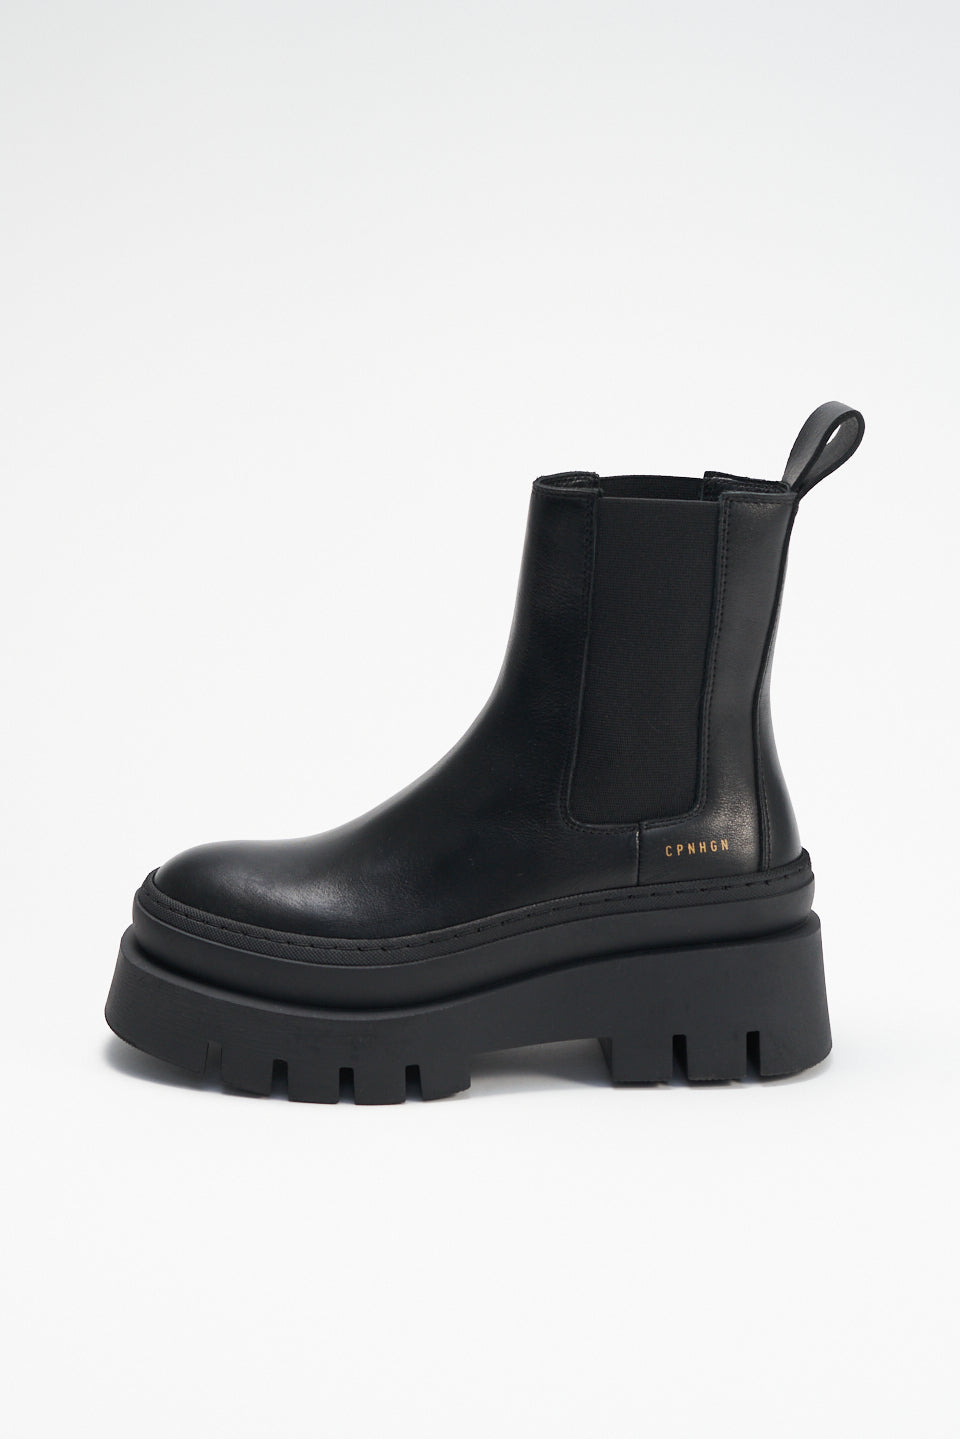 Vitello Black Black Chelsea Boots CPH686_BLACK-4